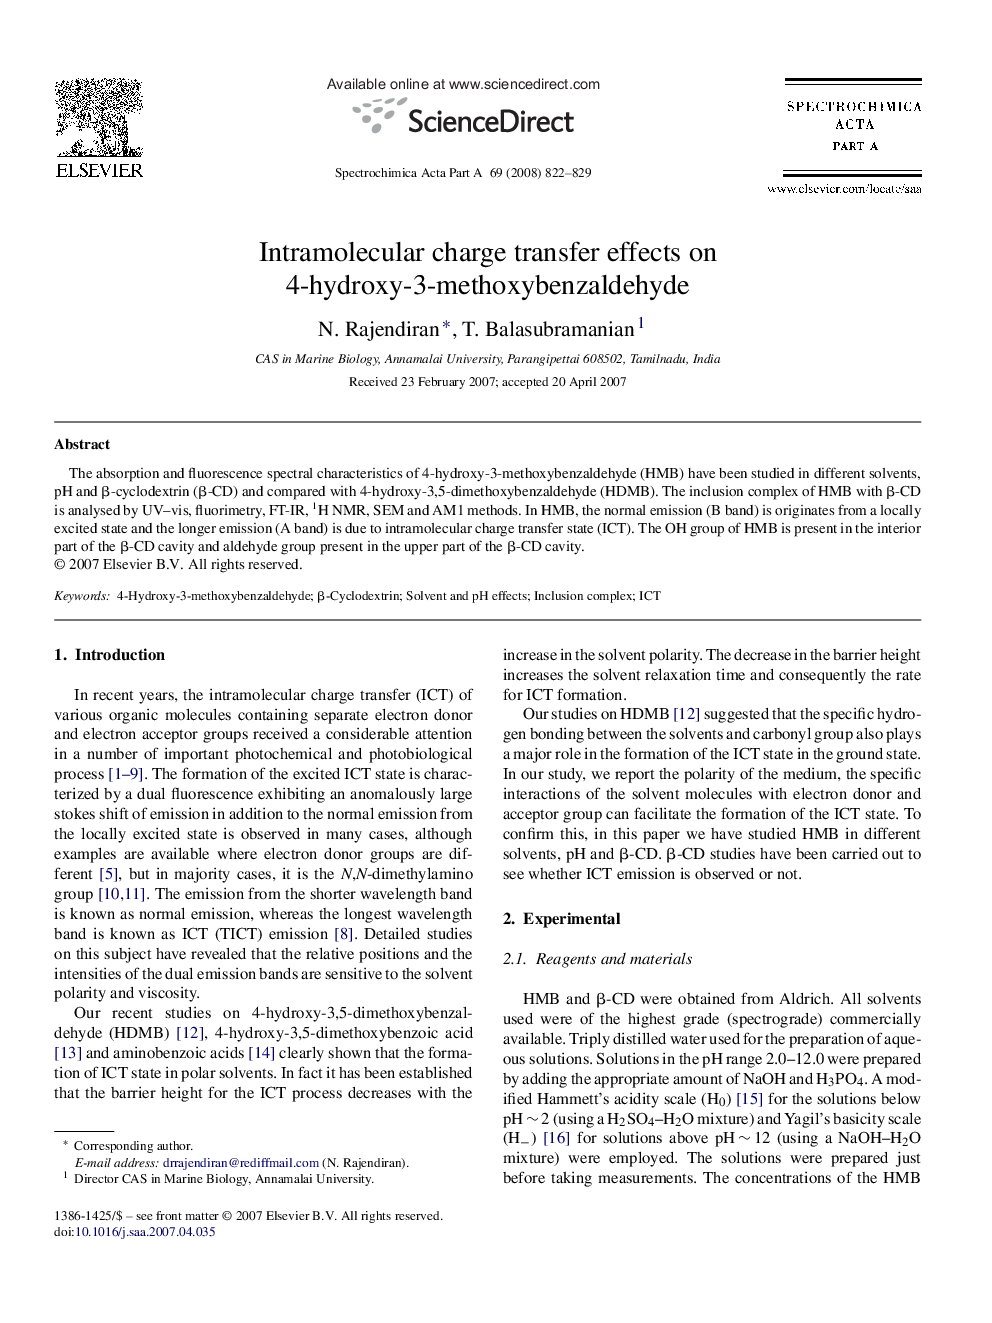 Intramolecular charge transfer effects on 4-hydroxy-3-methoxybenzaldehyde